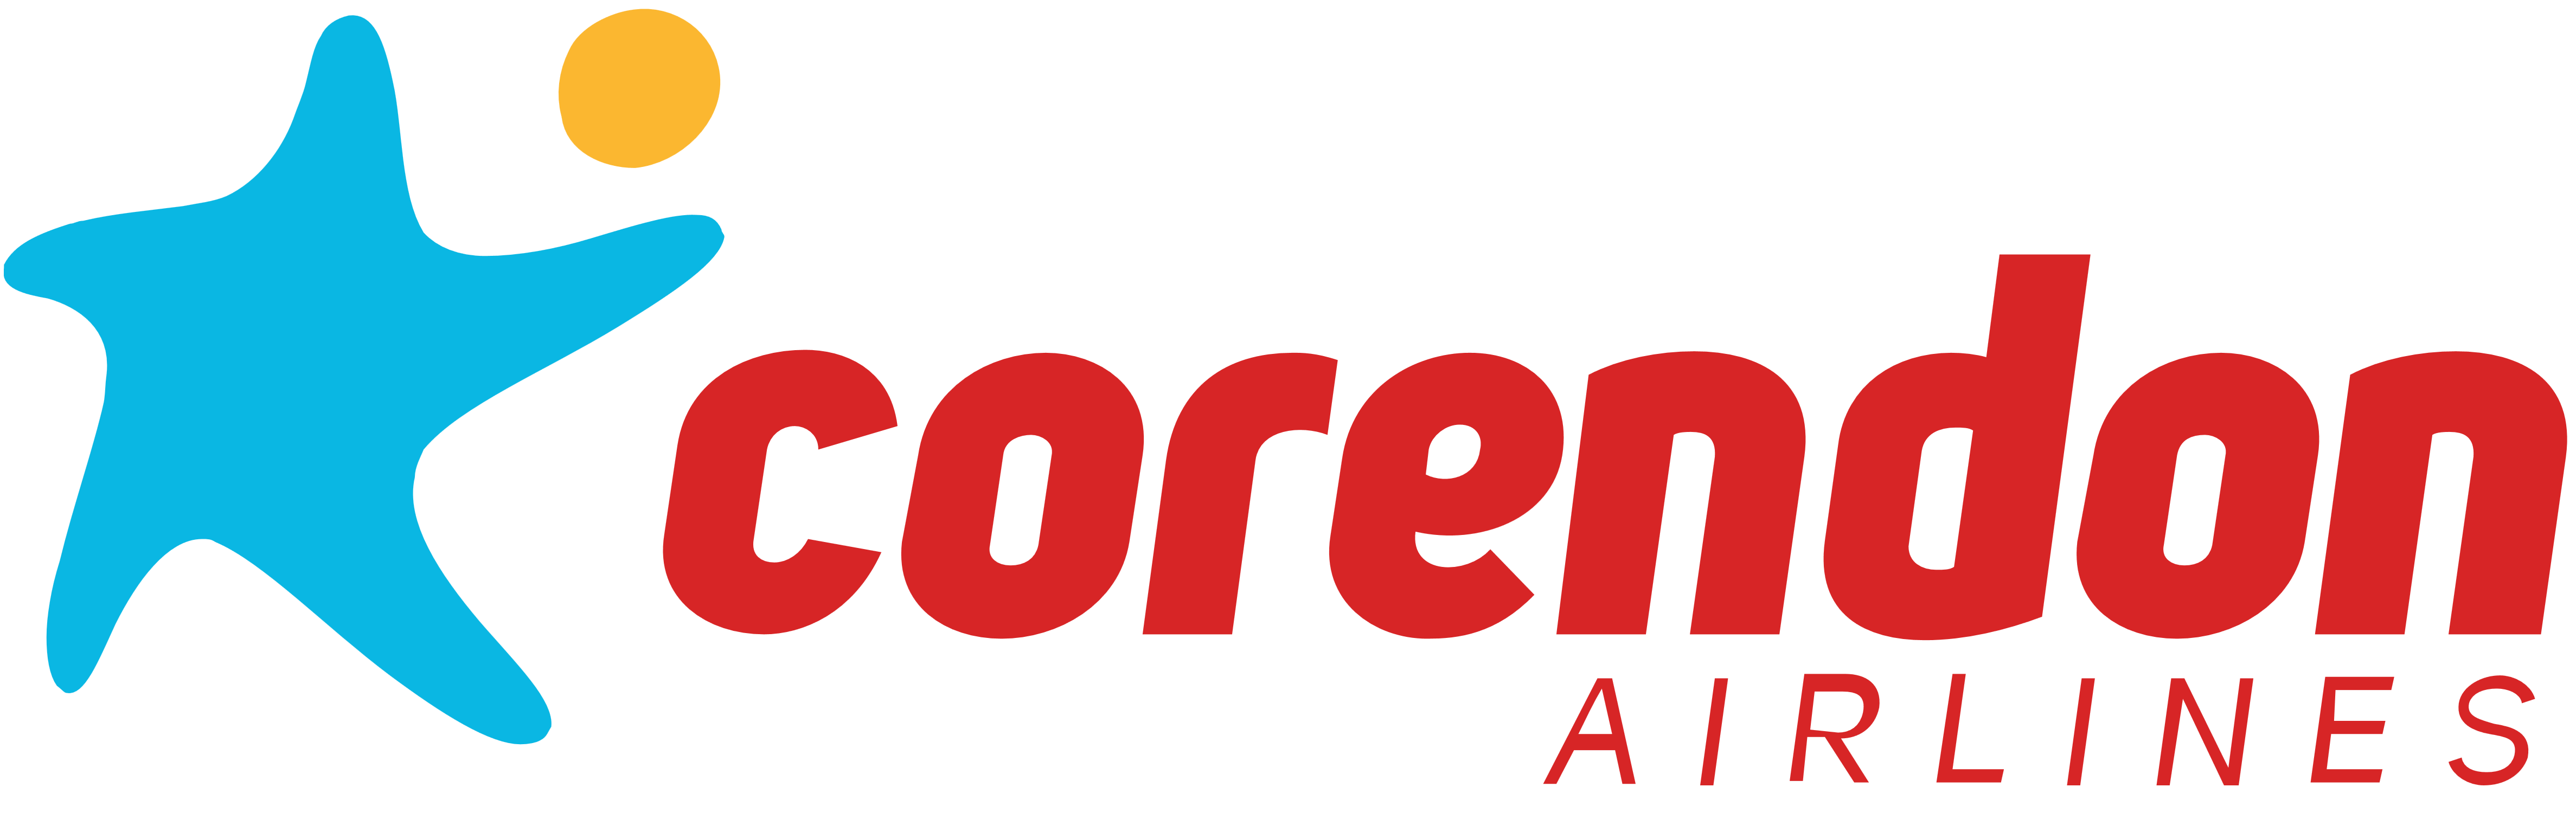 Corendon Airlines logo, logotype